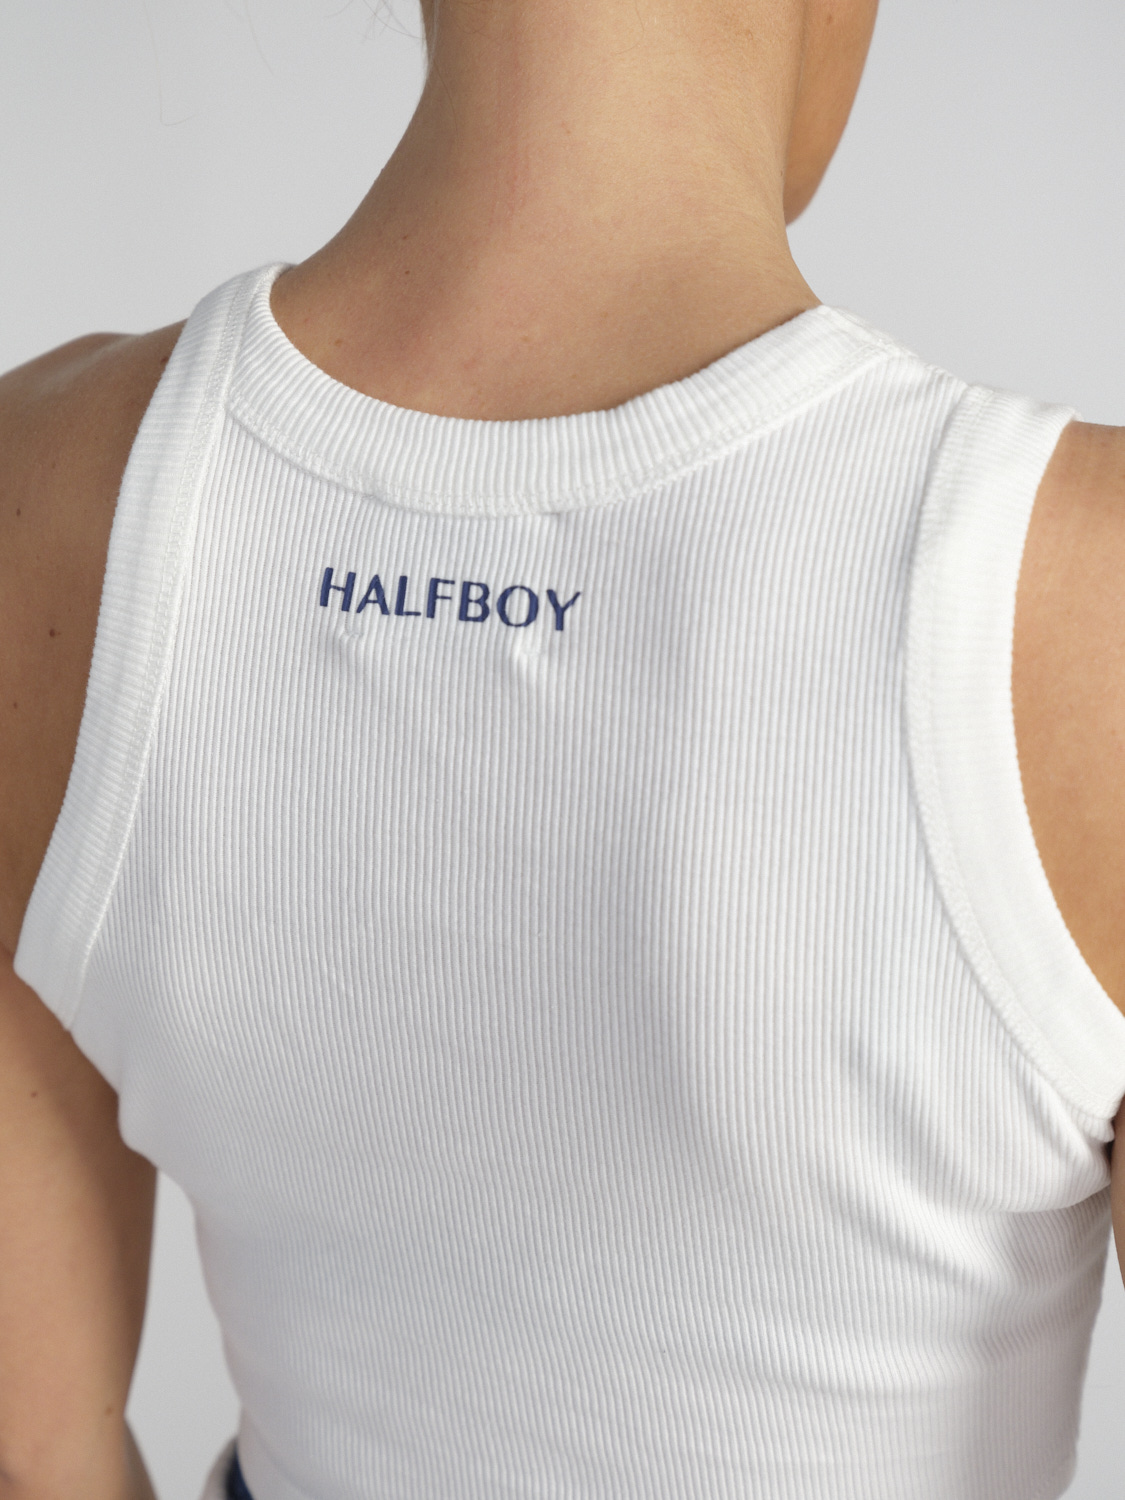 Halfboy Crop – Cropped Baumwoll-Tank-Top mit Logo-Detail   blanco S